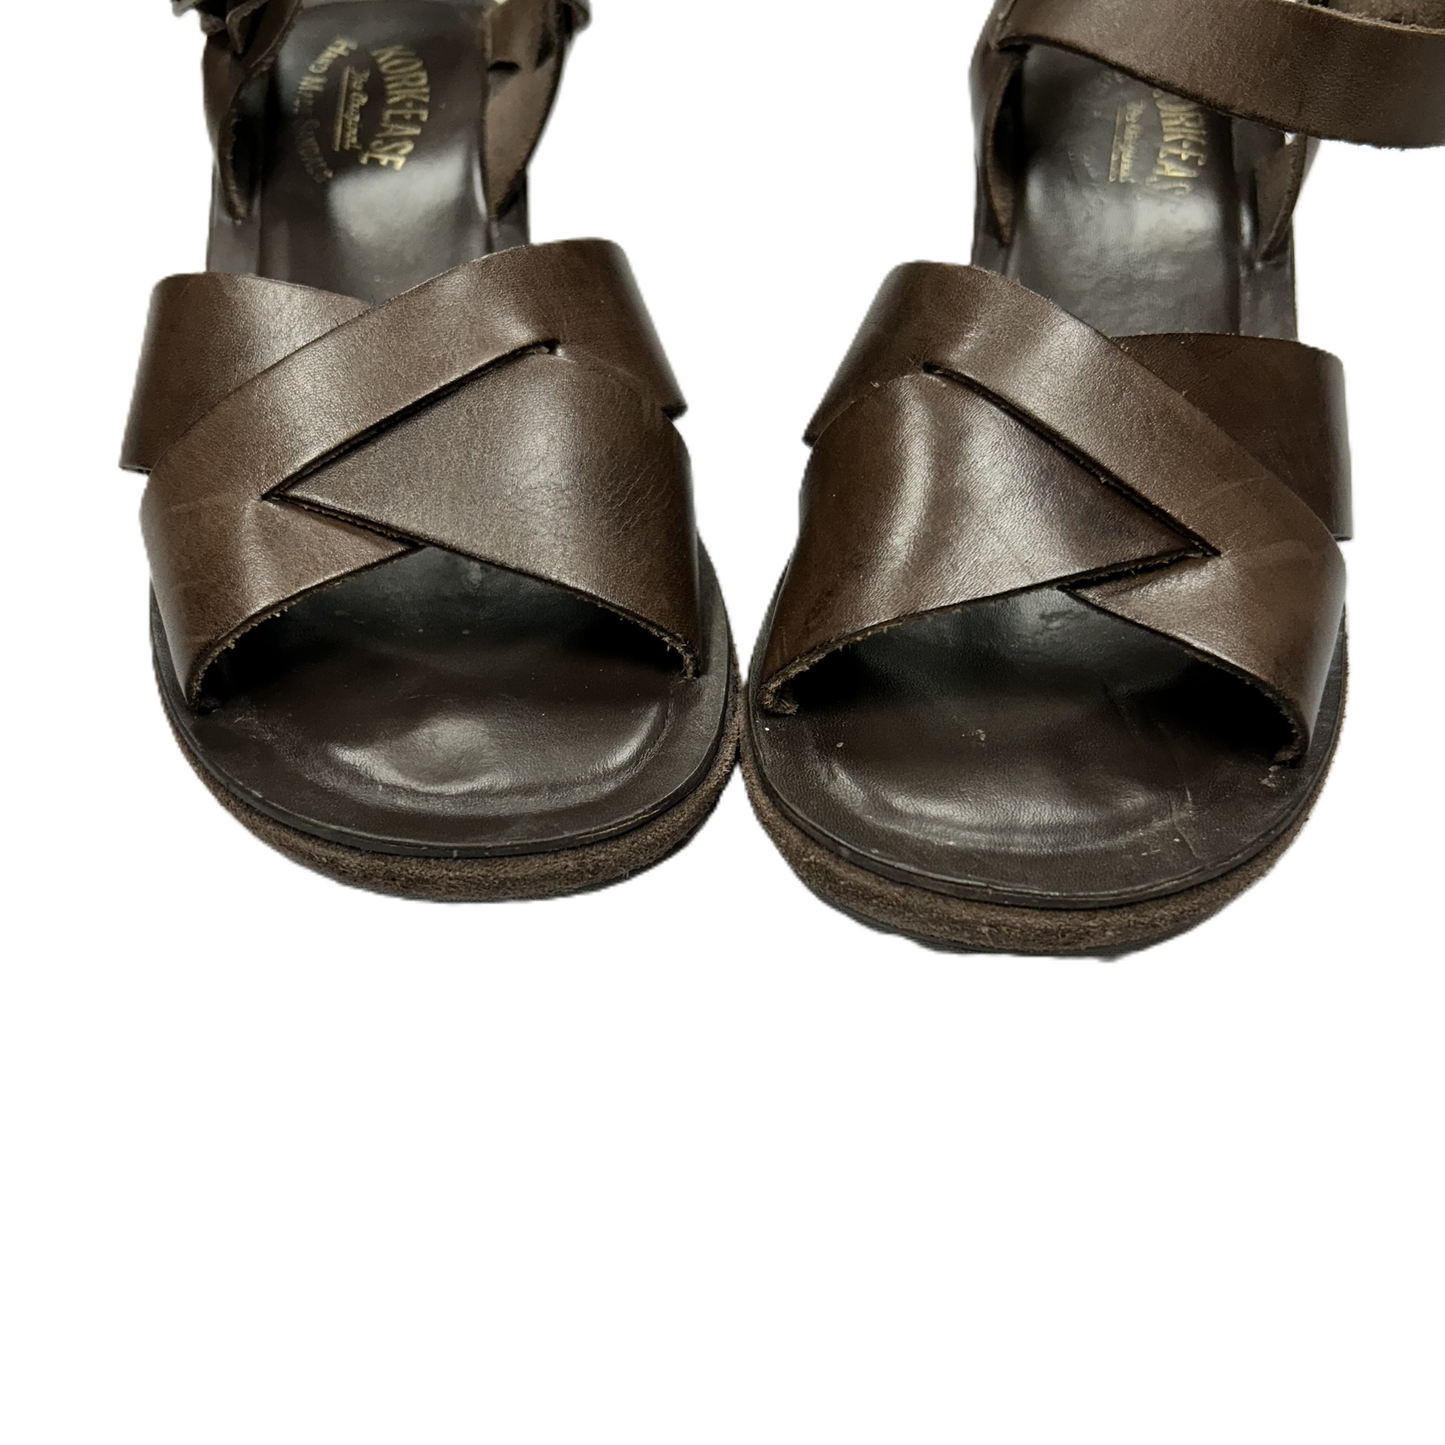 Sandals Heels Wedge By Kork Ease  Size: 7